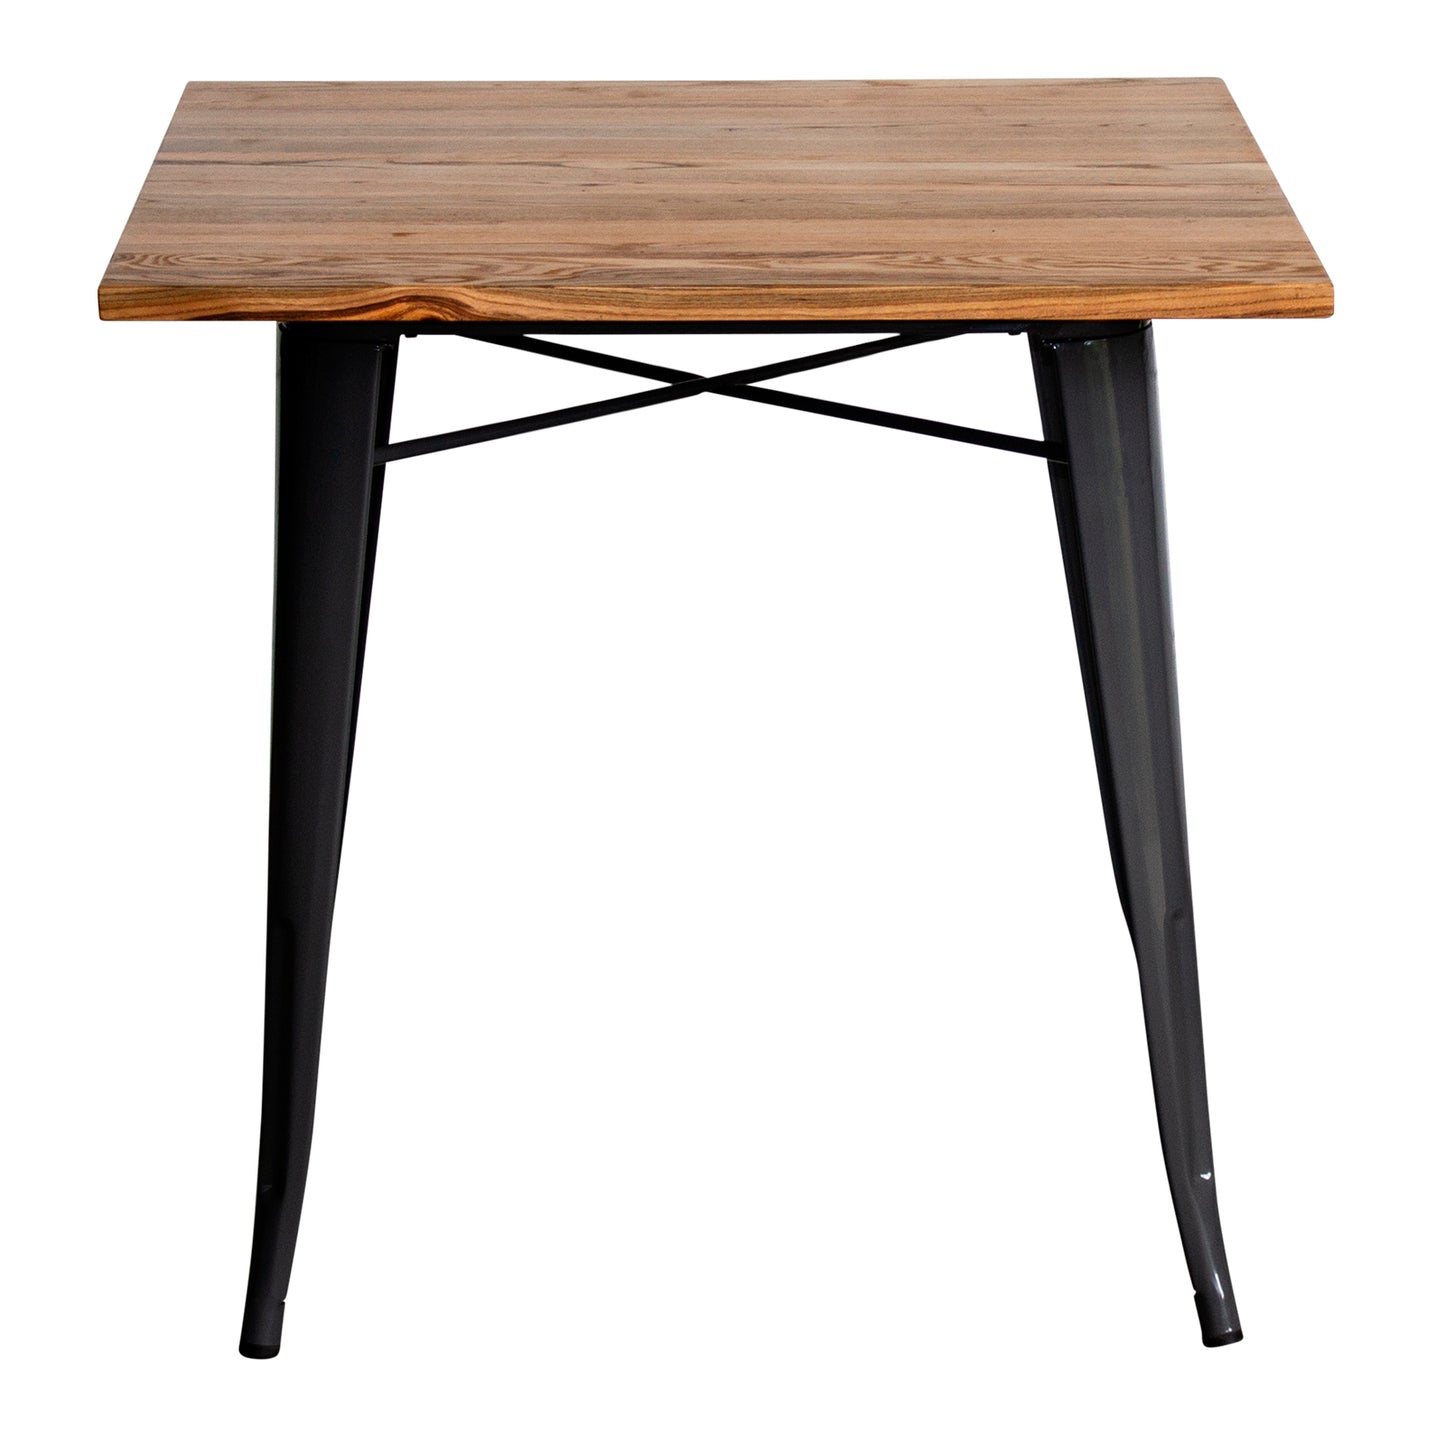 3PC Enna Table & Siena Chair Set - Graphite Grey